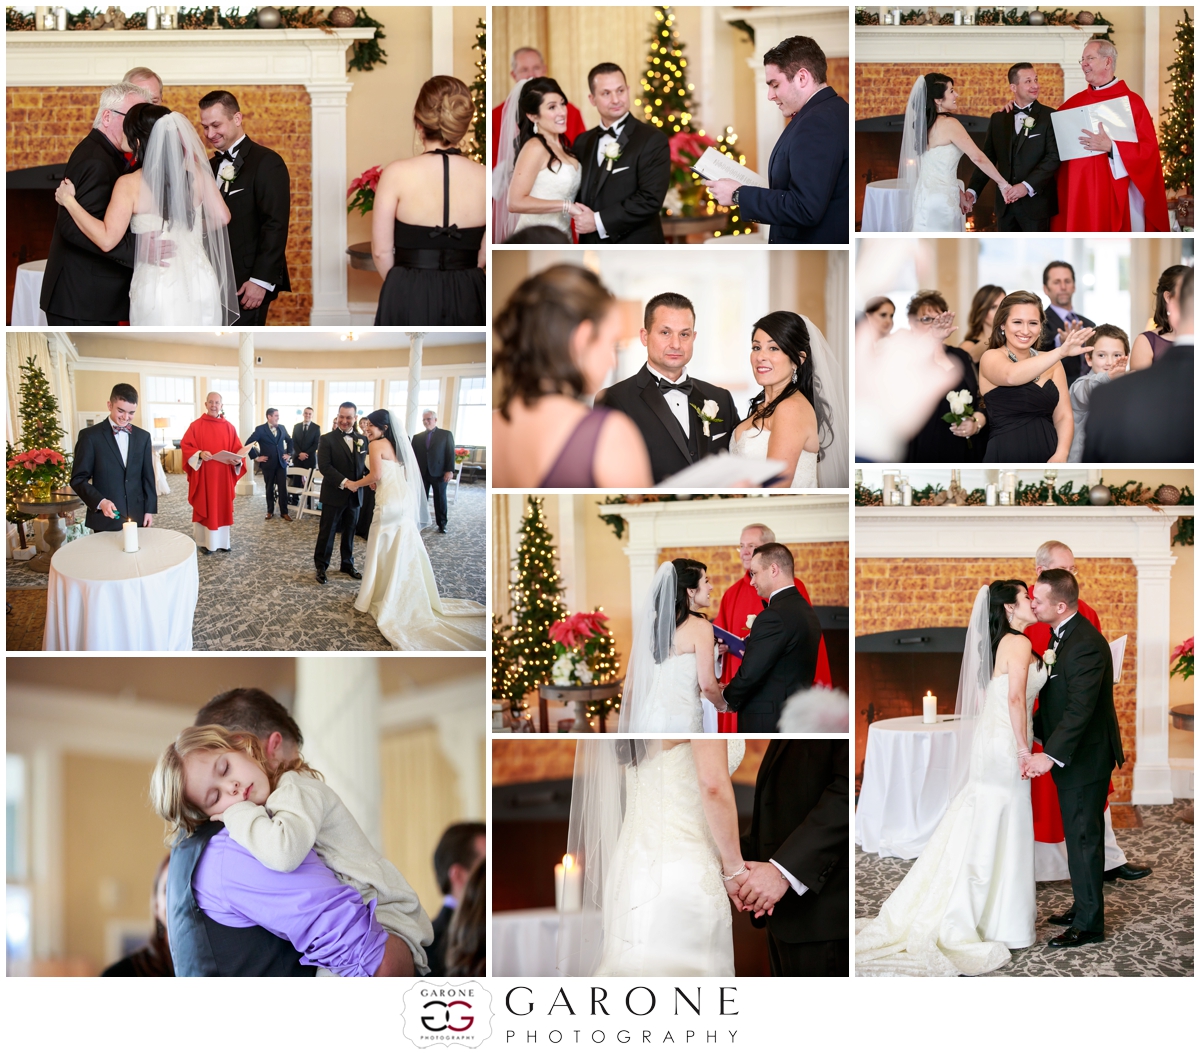 Diane_and_Mark_Mount_washington_Resort_Winter_wedding_Garone_photography_0021.jpg